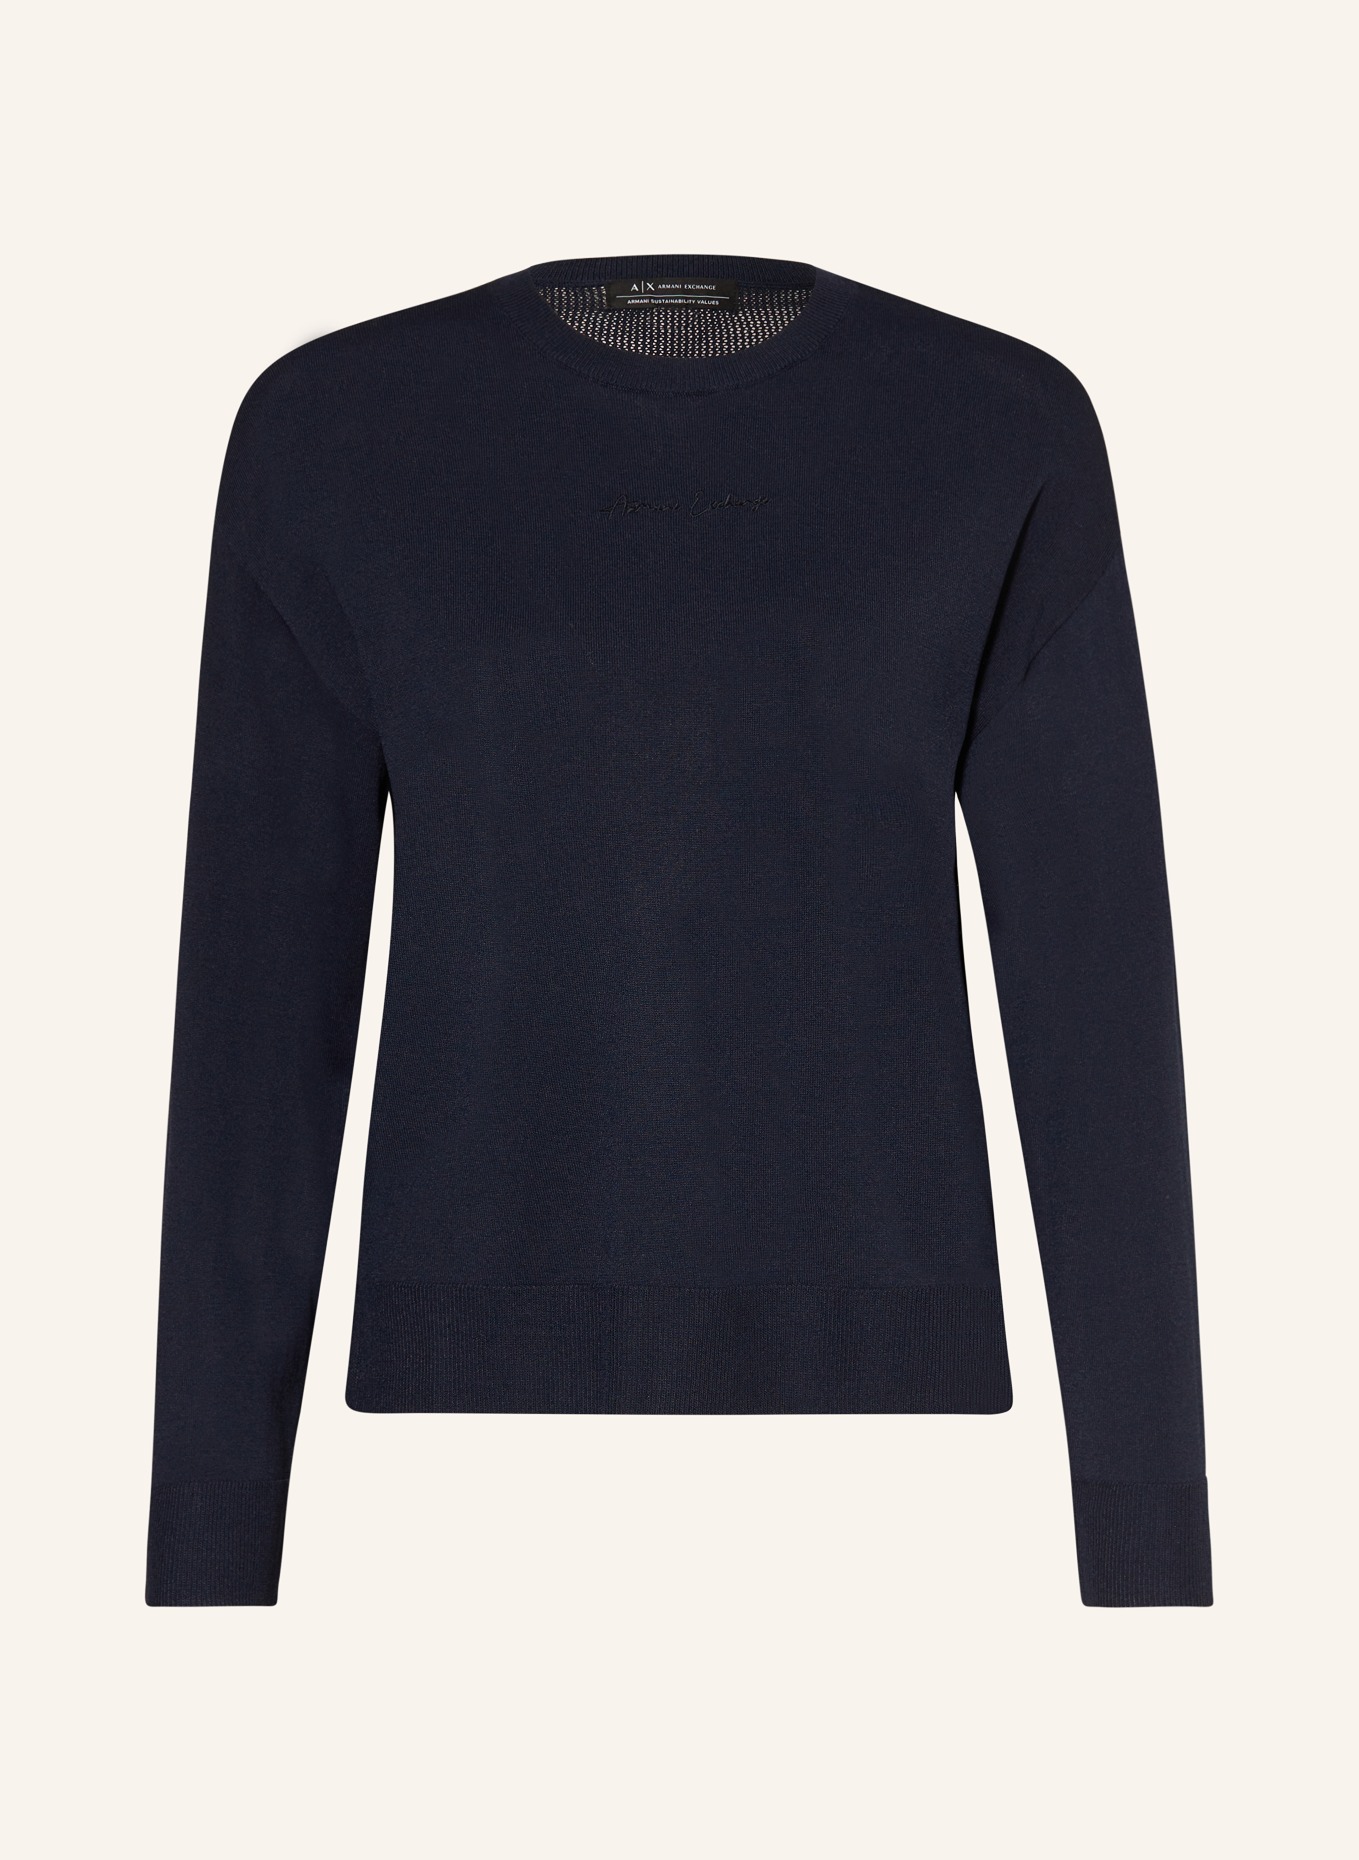 ARMANI EXCHANGE Pullover, Farbe: DUNKELBLAU (Bild 1)